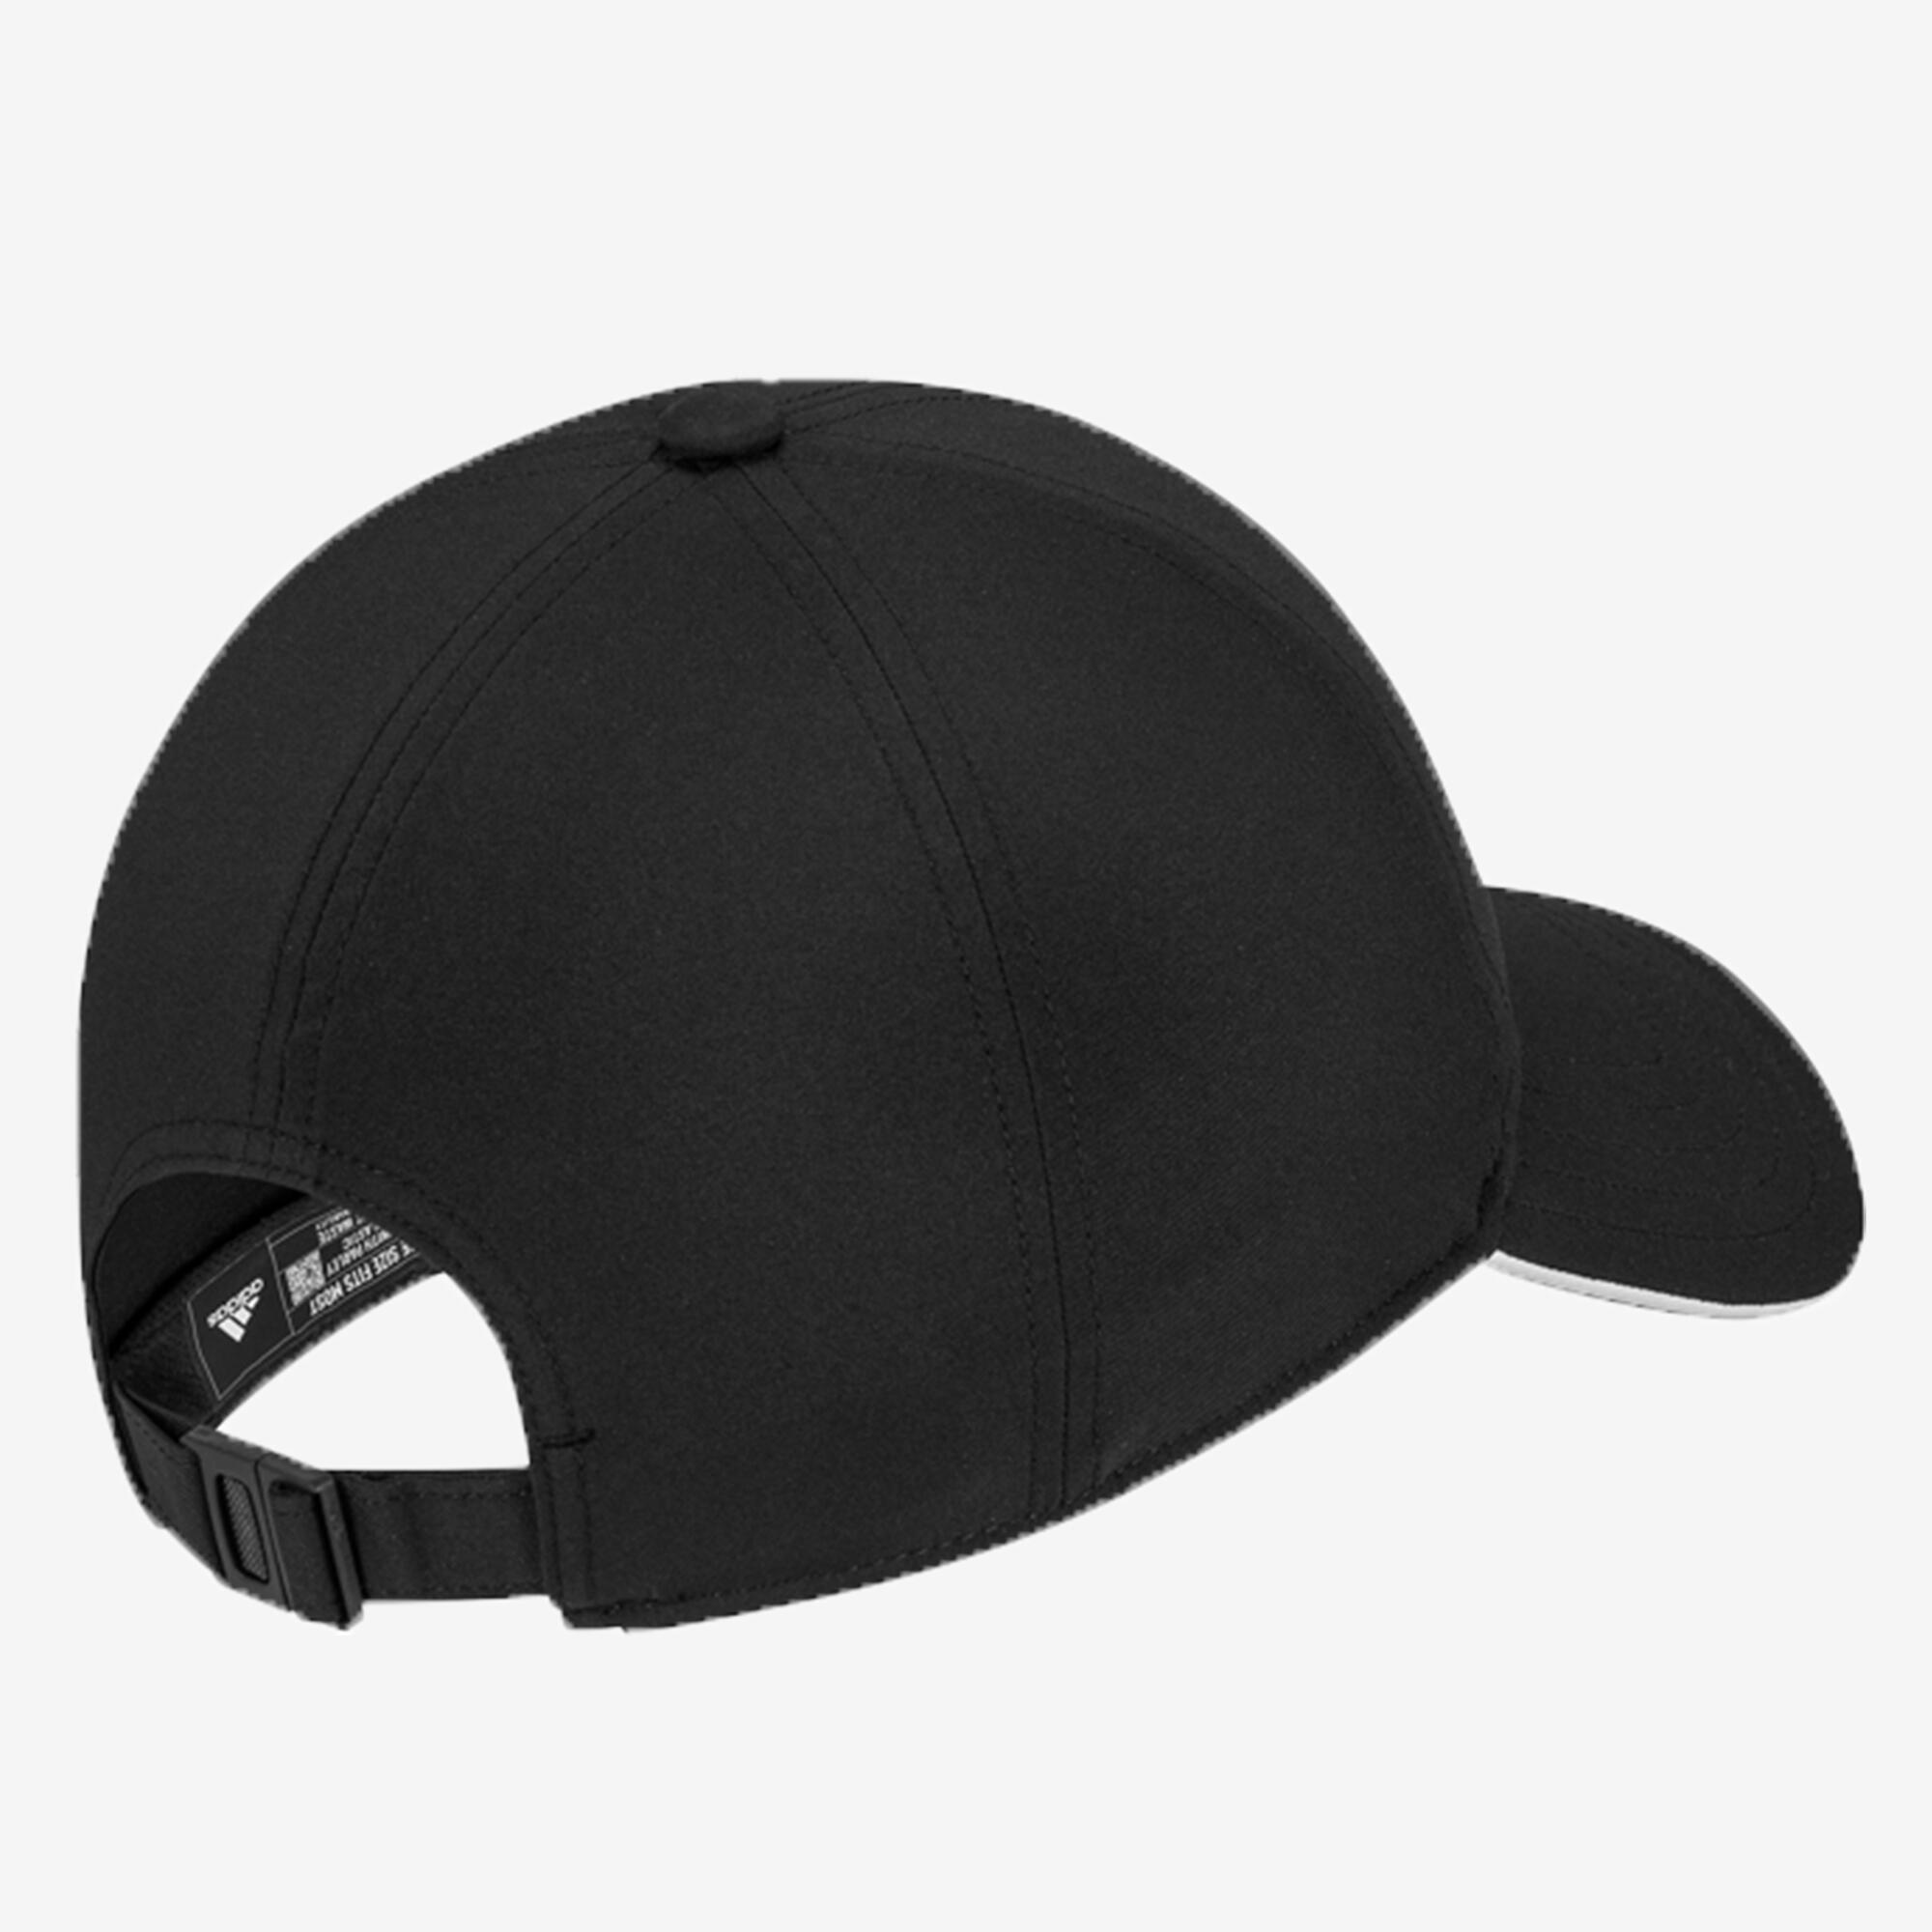 Sports Cap Size 58 cm - Black 2/2